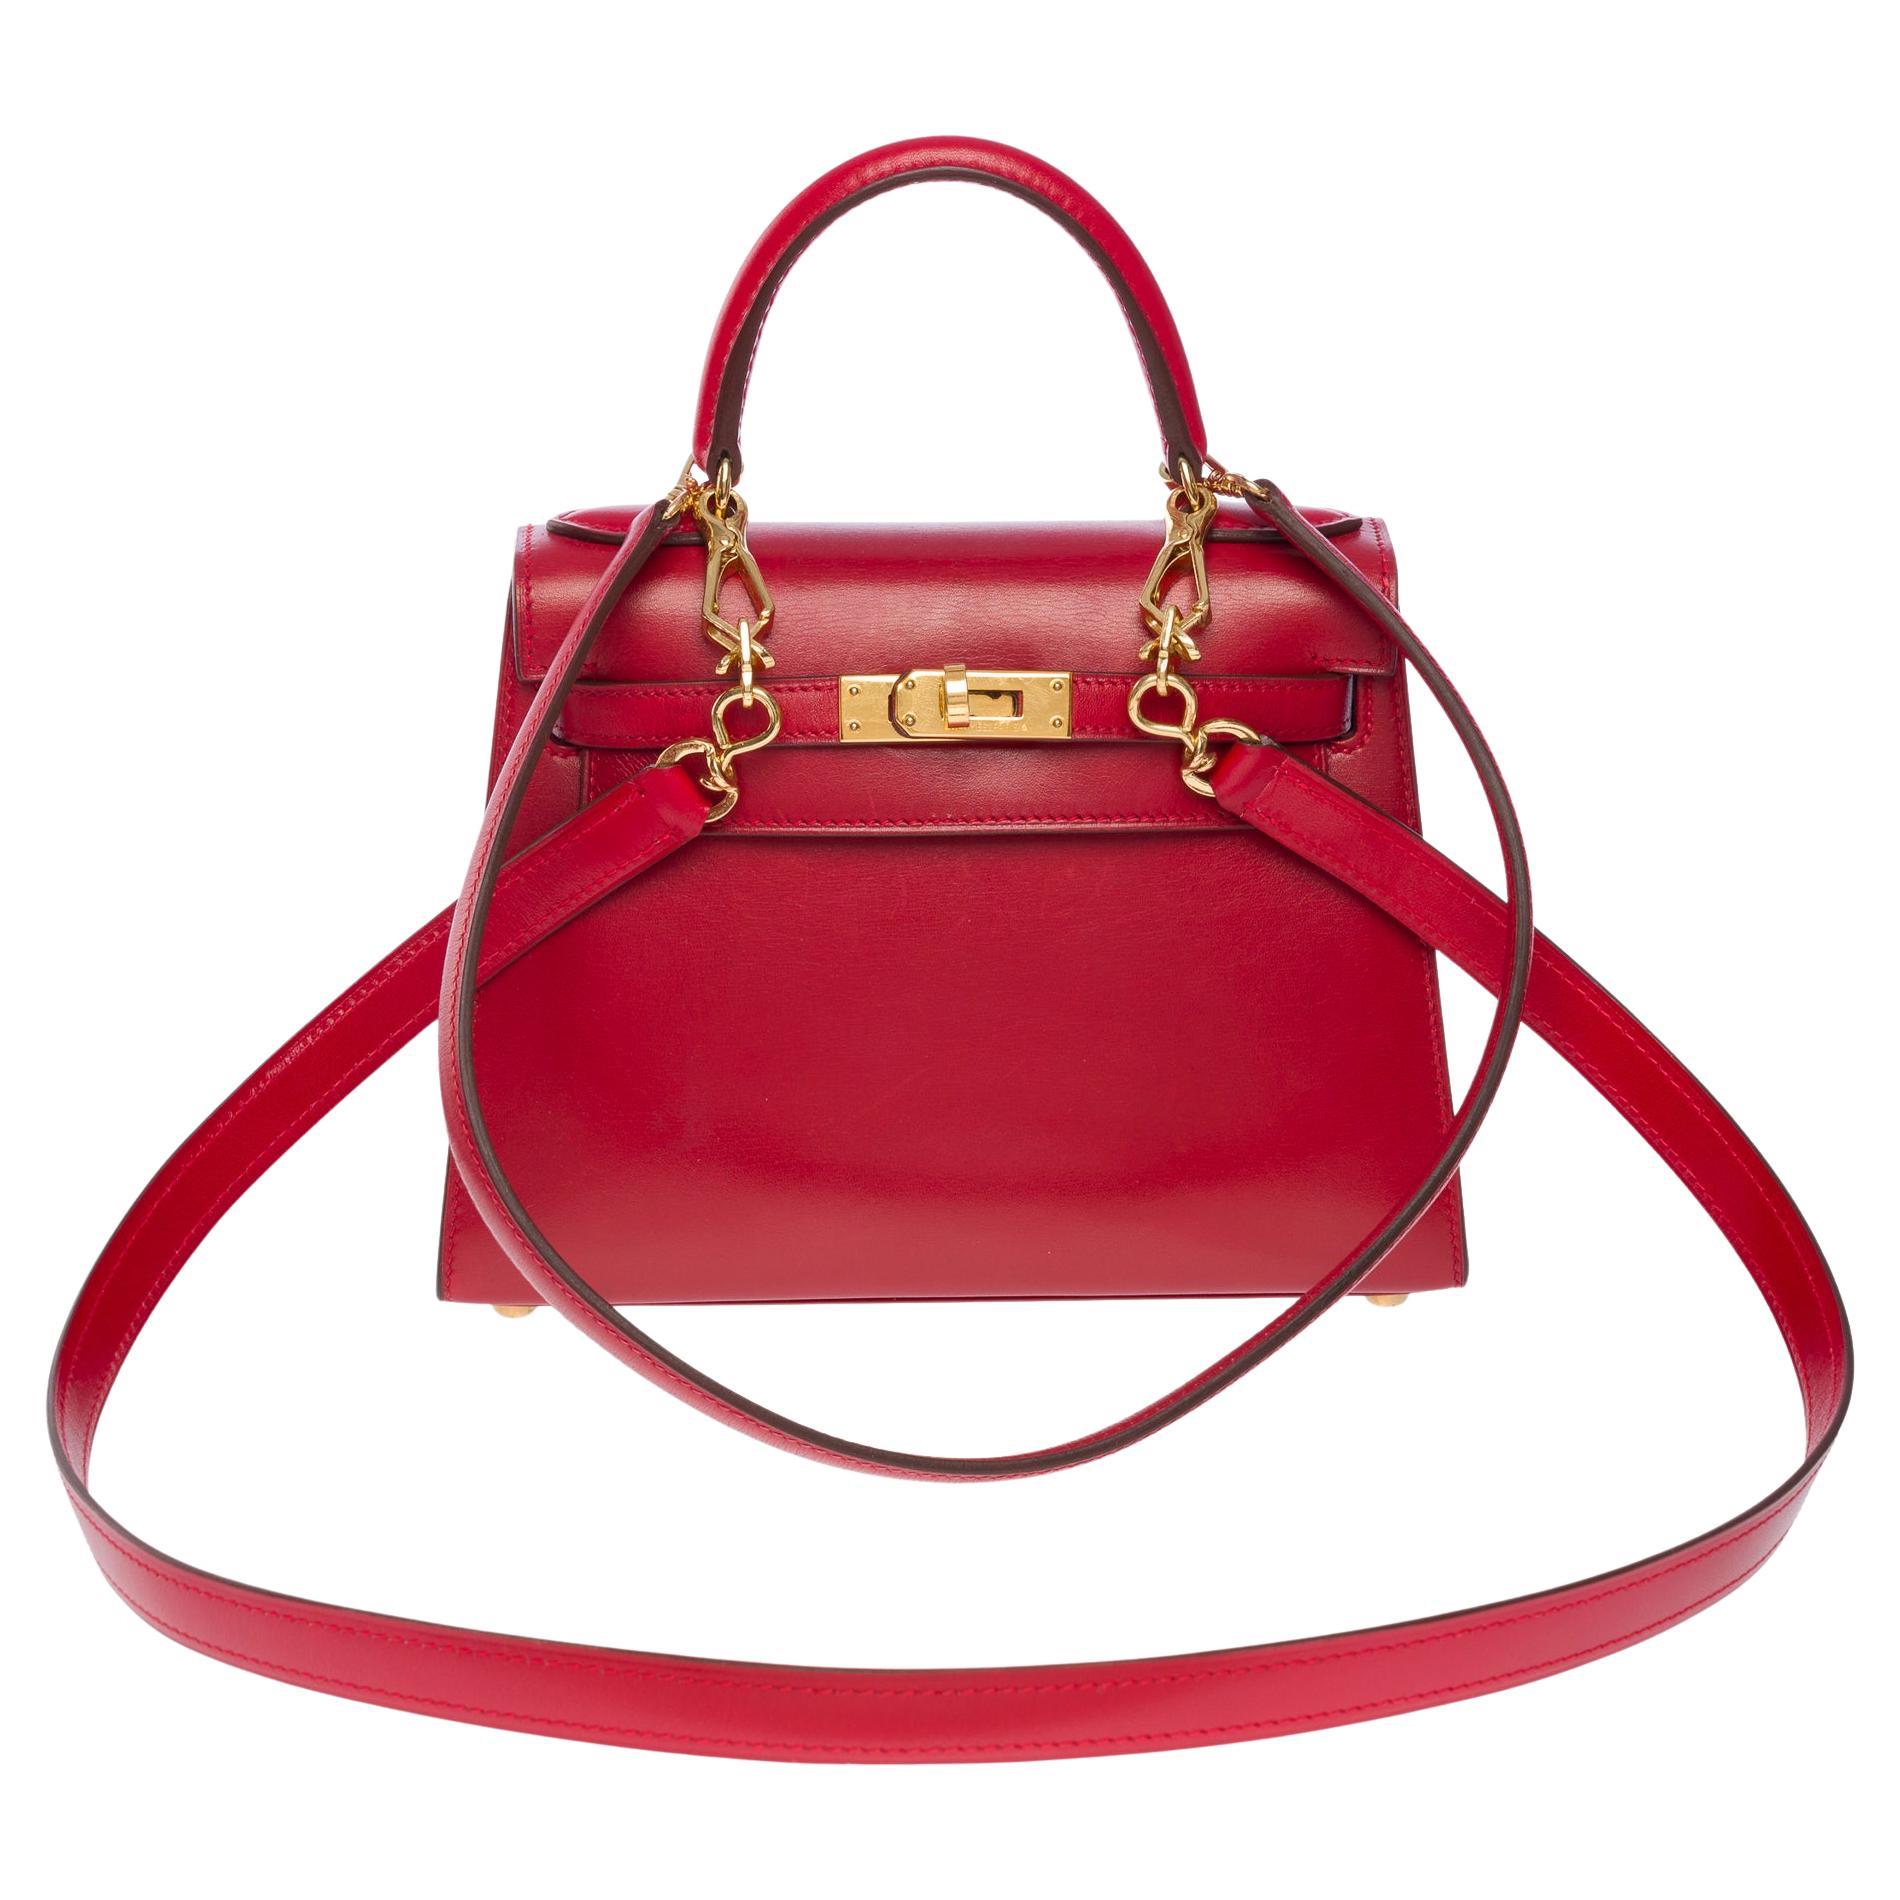 Rare Hermès Mini Kelly 20cm handbag double strap in Red H box calfskin, GHW For Sale